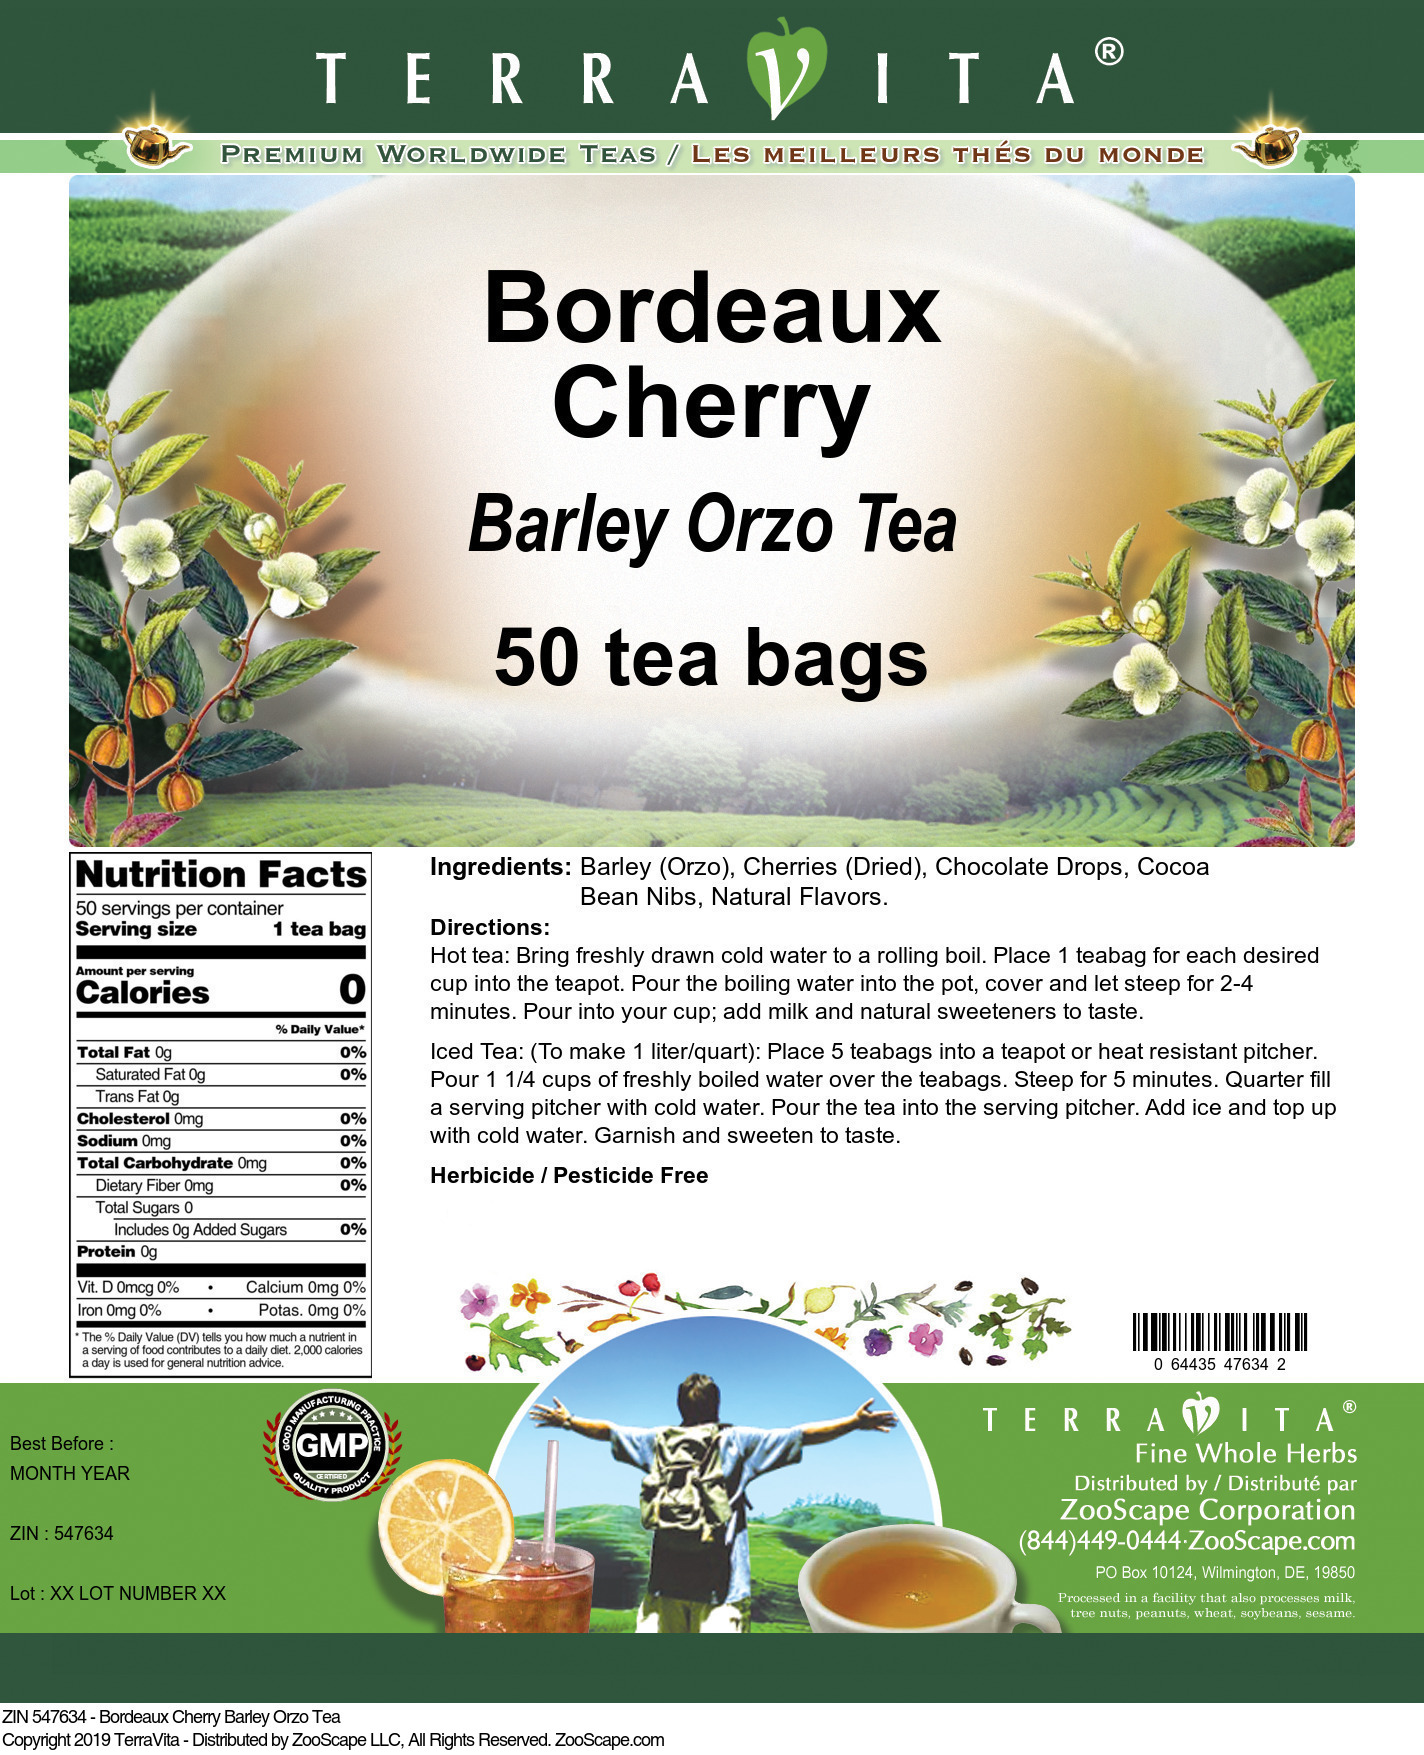 Bordeaux Cherry Barley Orzo Tea - Label